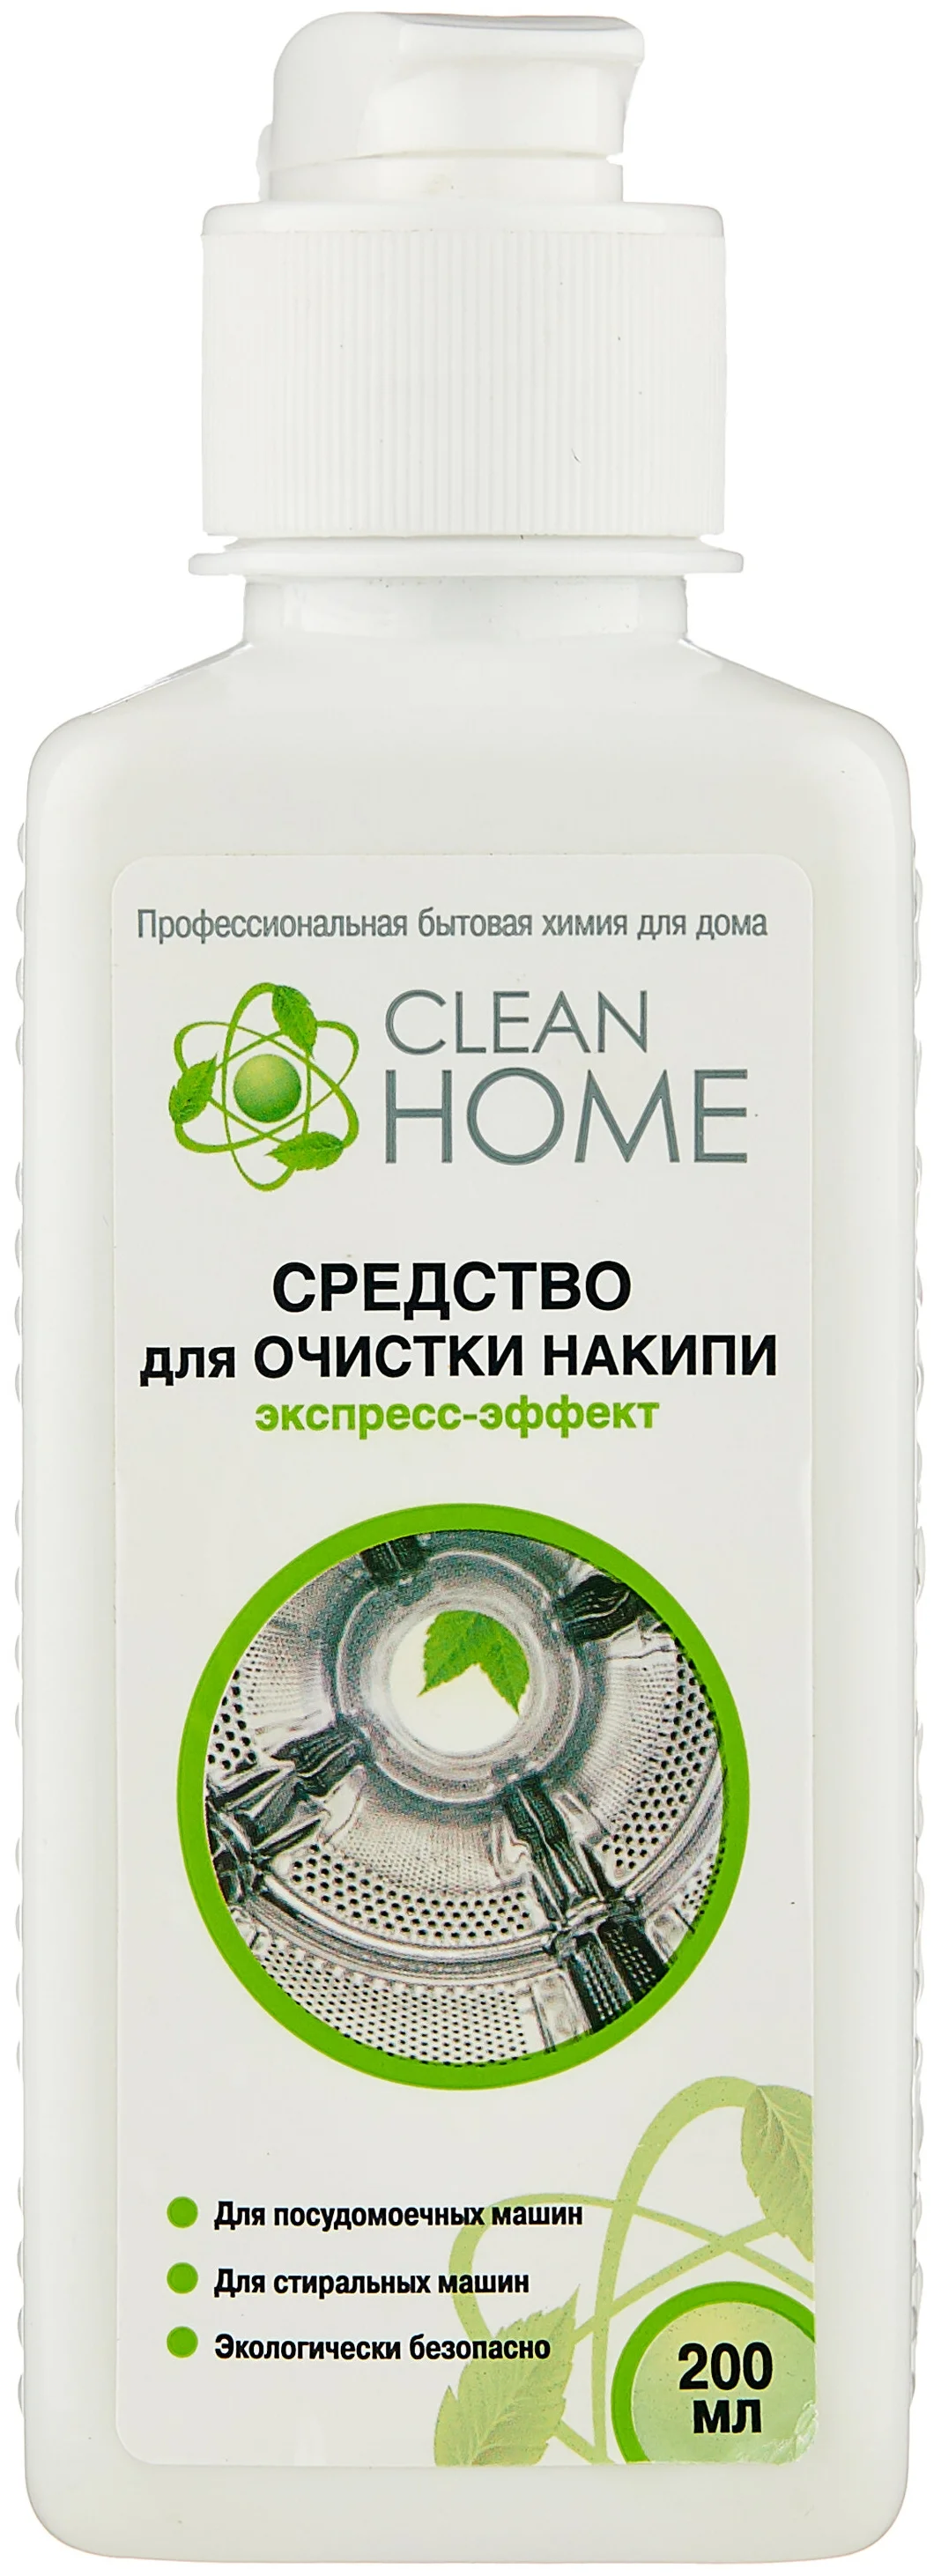 Clean Home "Экспресс-эффект", 200 мл - для удаления накипи, устранения неприятного запаха